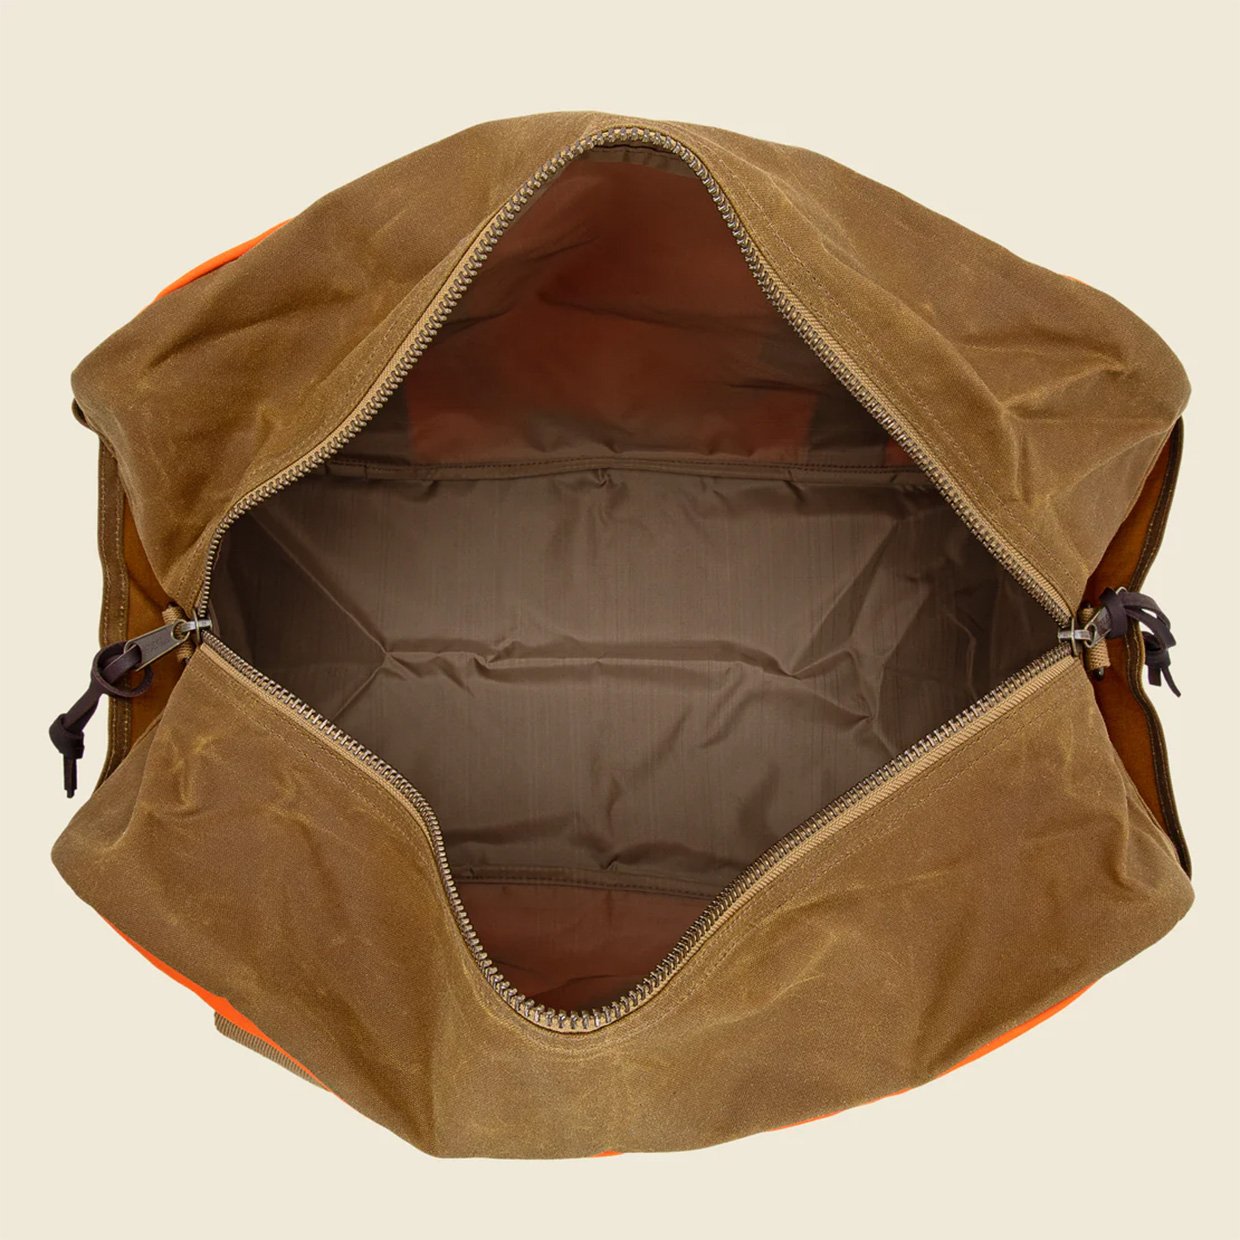 Filson Tin Cloth Medium Duffel Bag